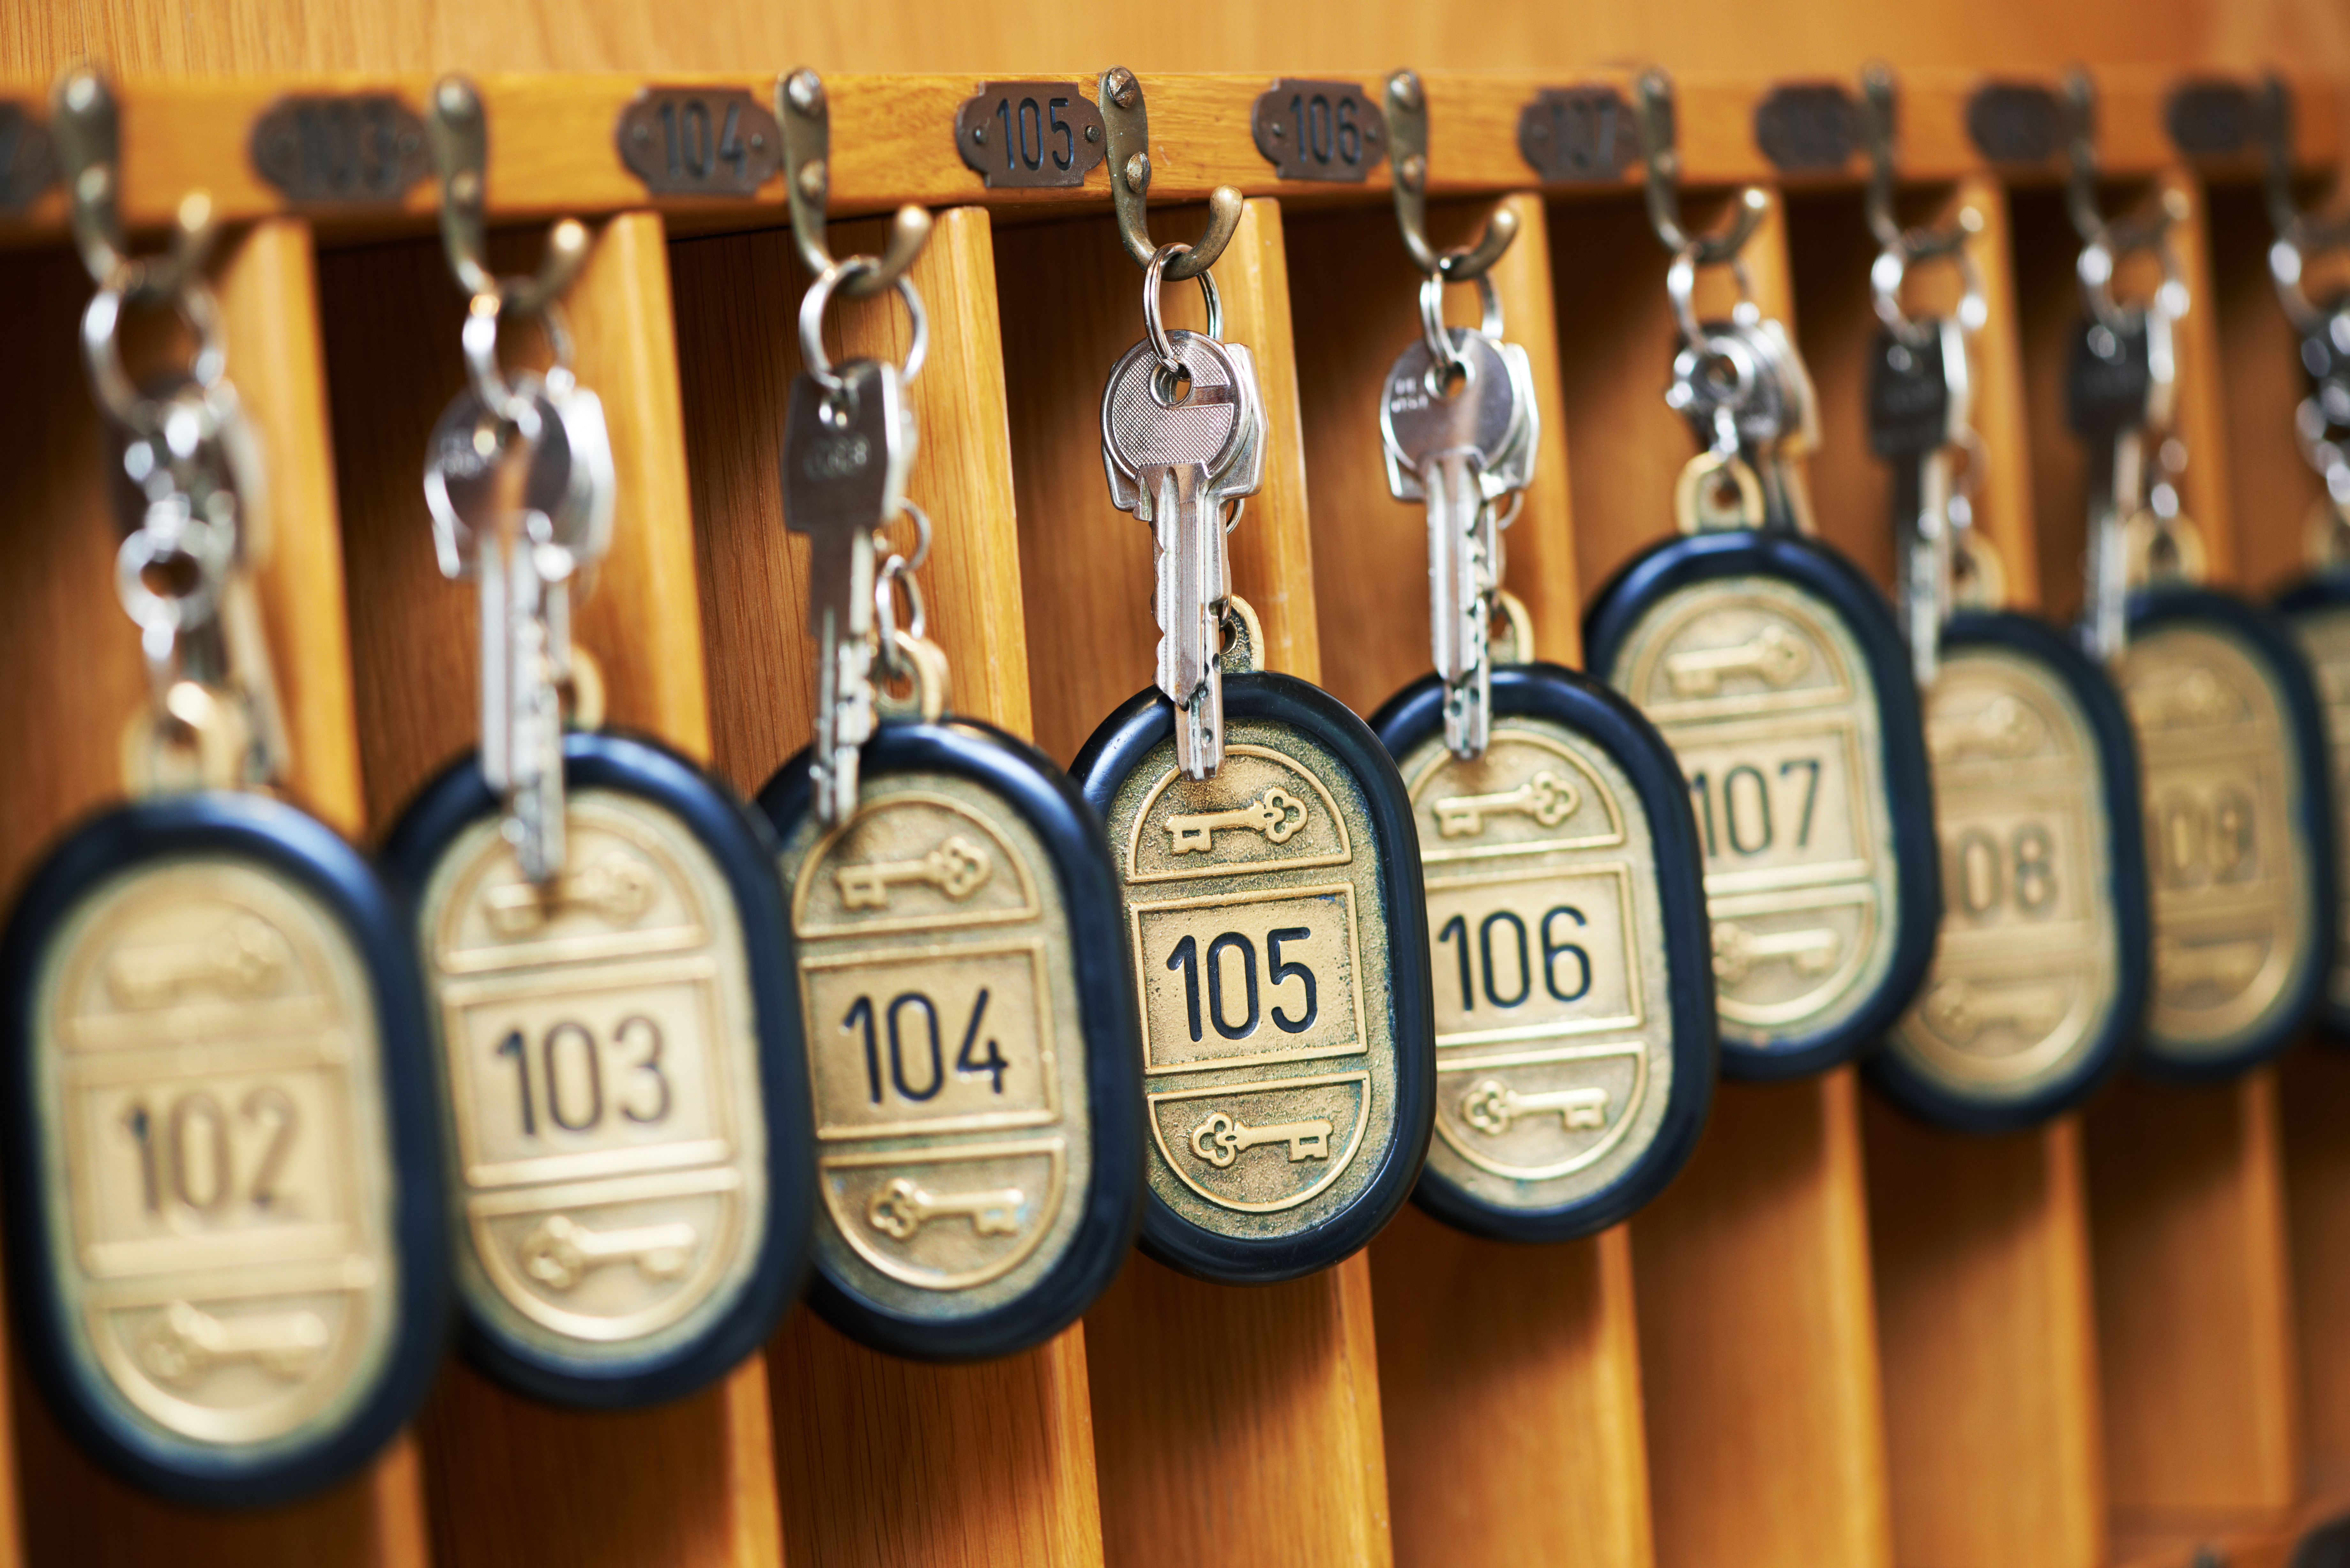 Motel room keys at reception desk counter. | Source: Shutterstock